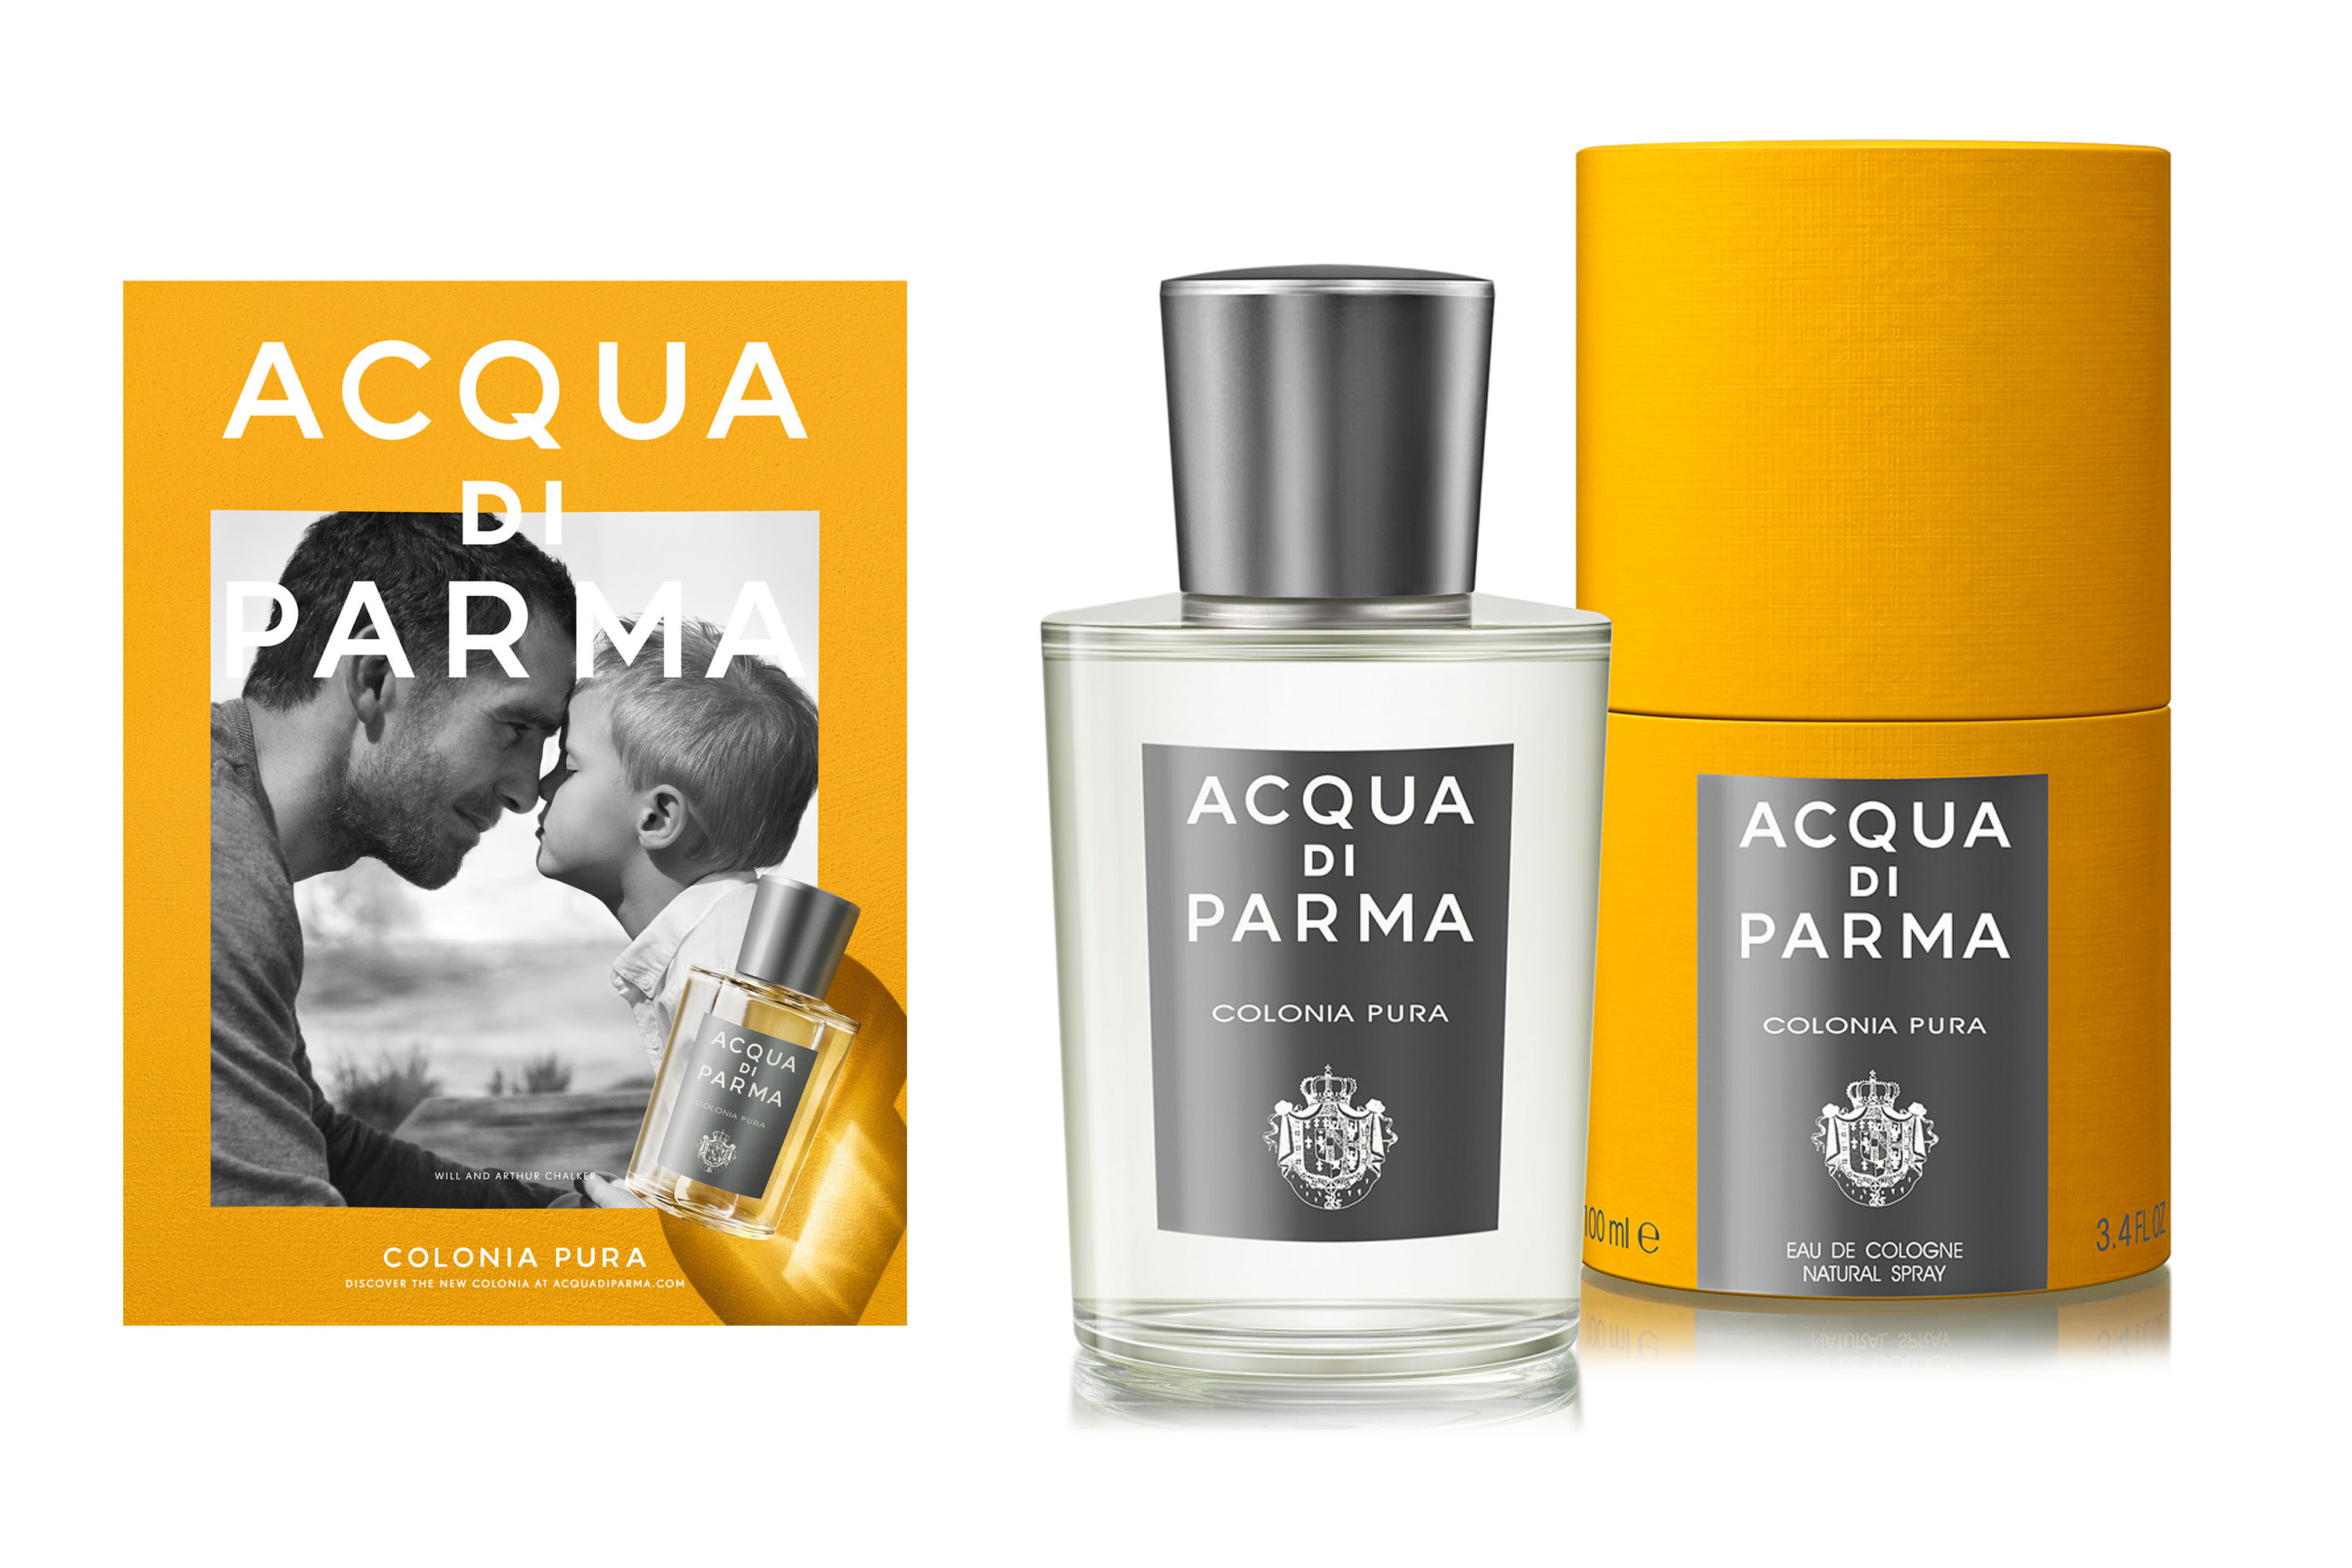 Acqua Di Parma アクア ディ パルマ 100年以上続く香りを現代的に解釈した新作 コロニア プーラ News 伊勢丹新宿店メンズ館 公式メディア Isetan Men S Net